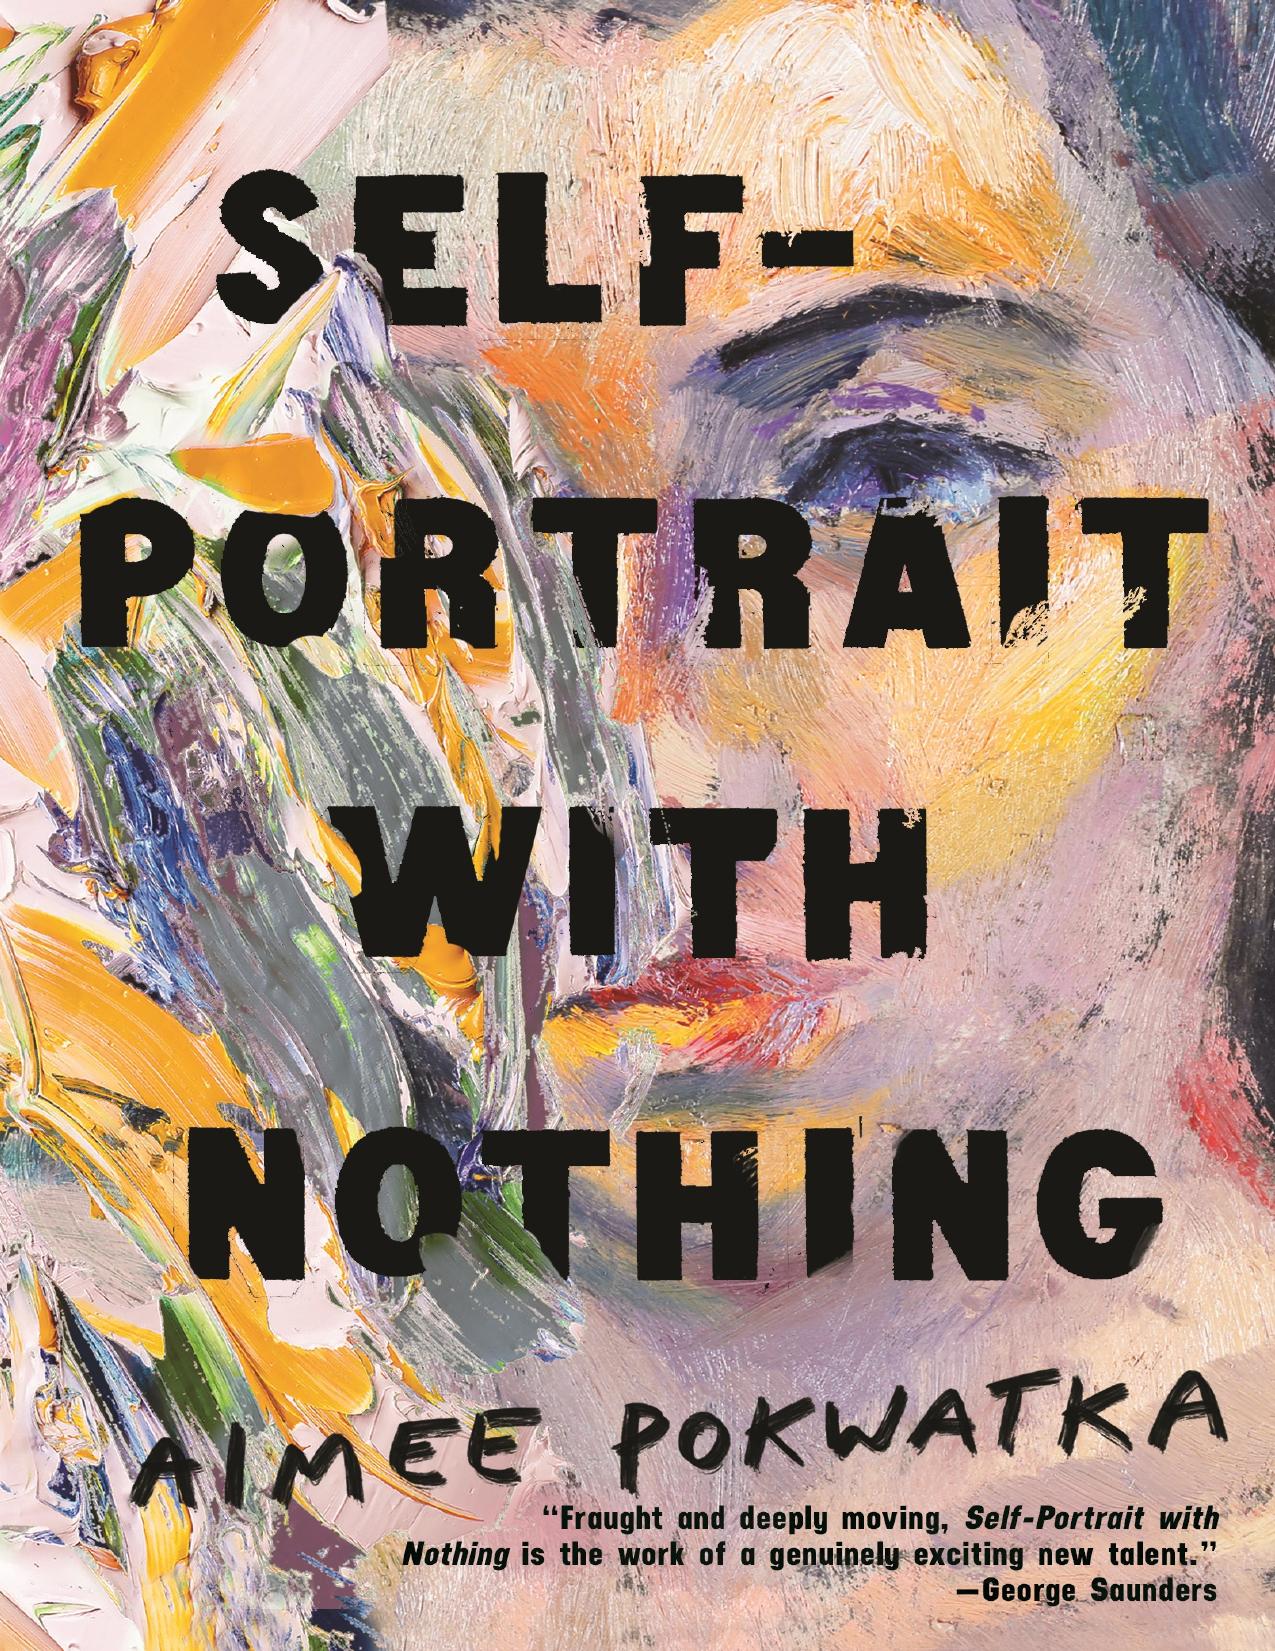 Self-Portrait with Nothing - Aimee Pokwatka